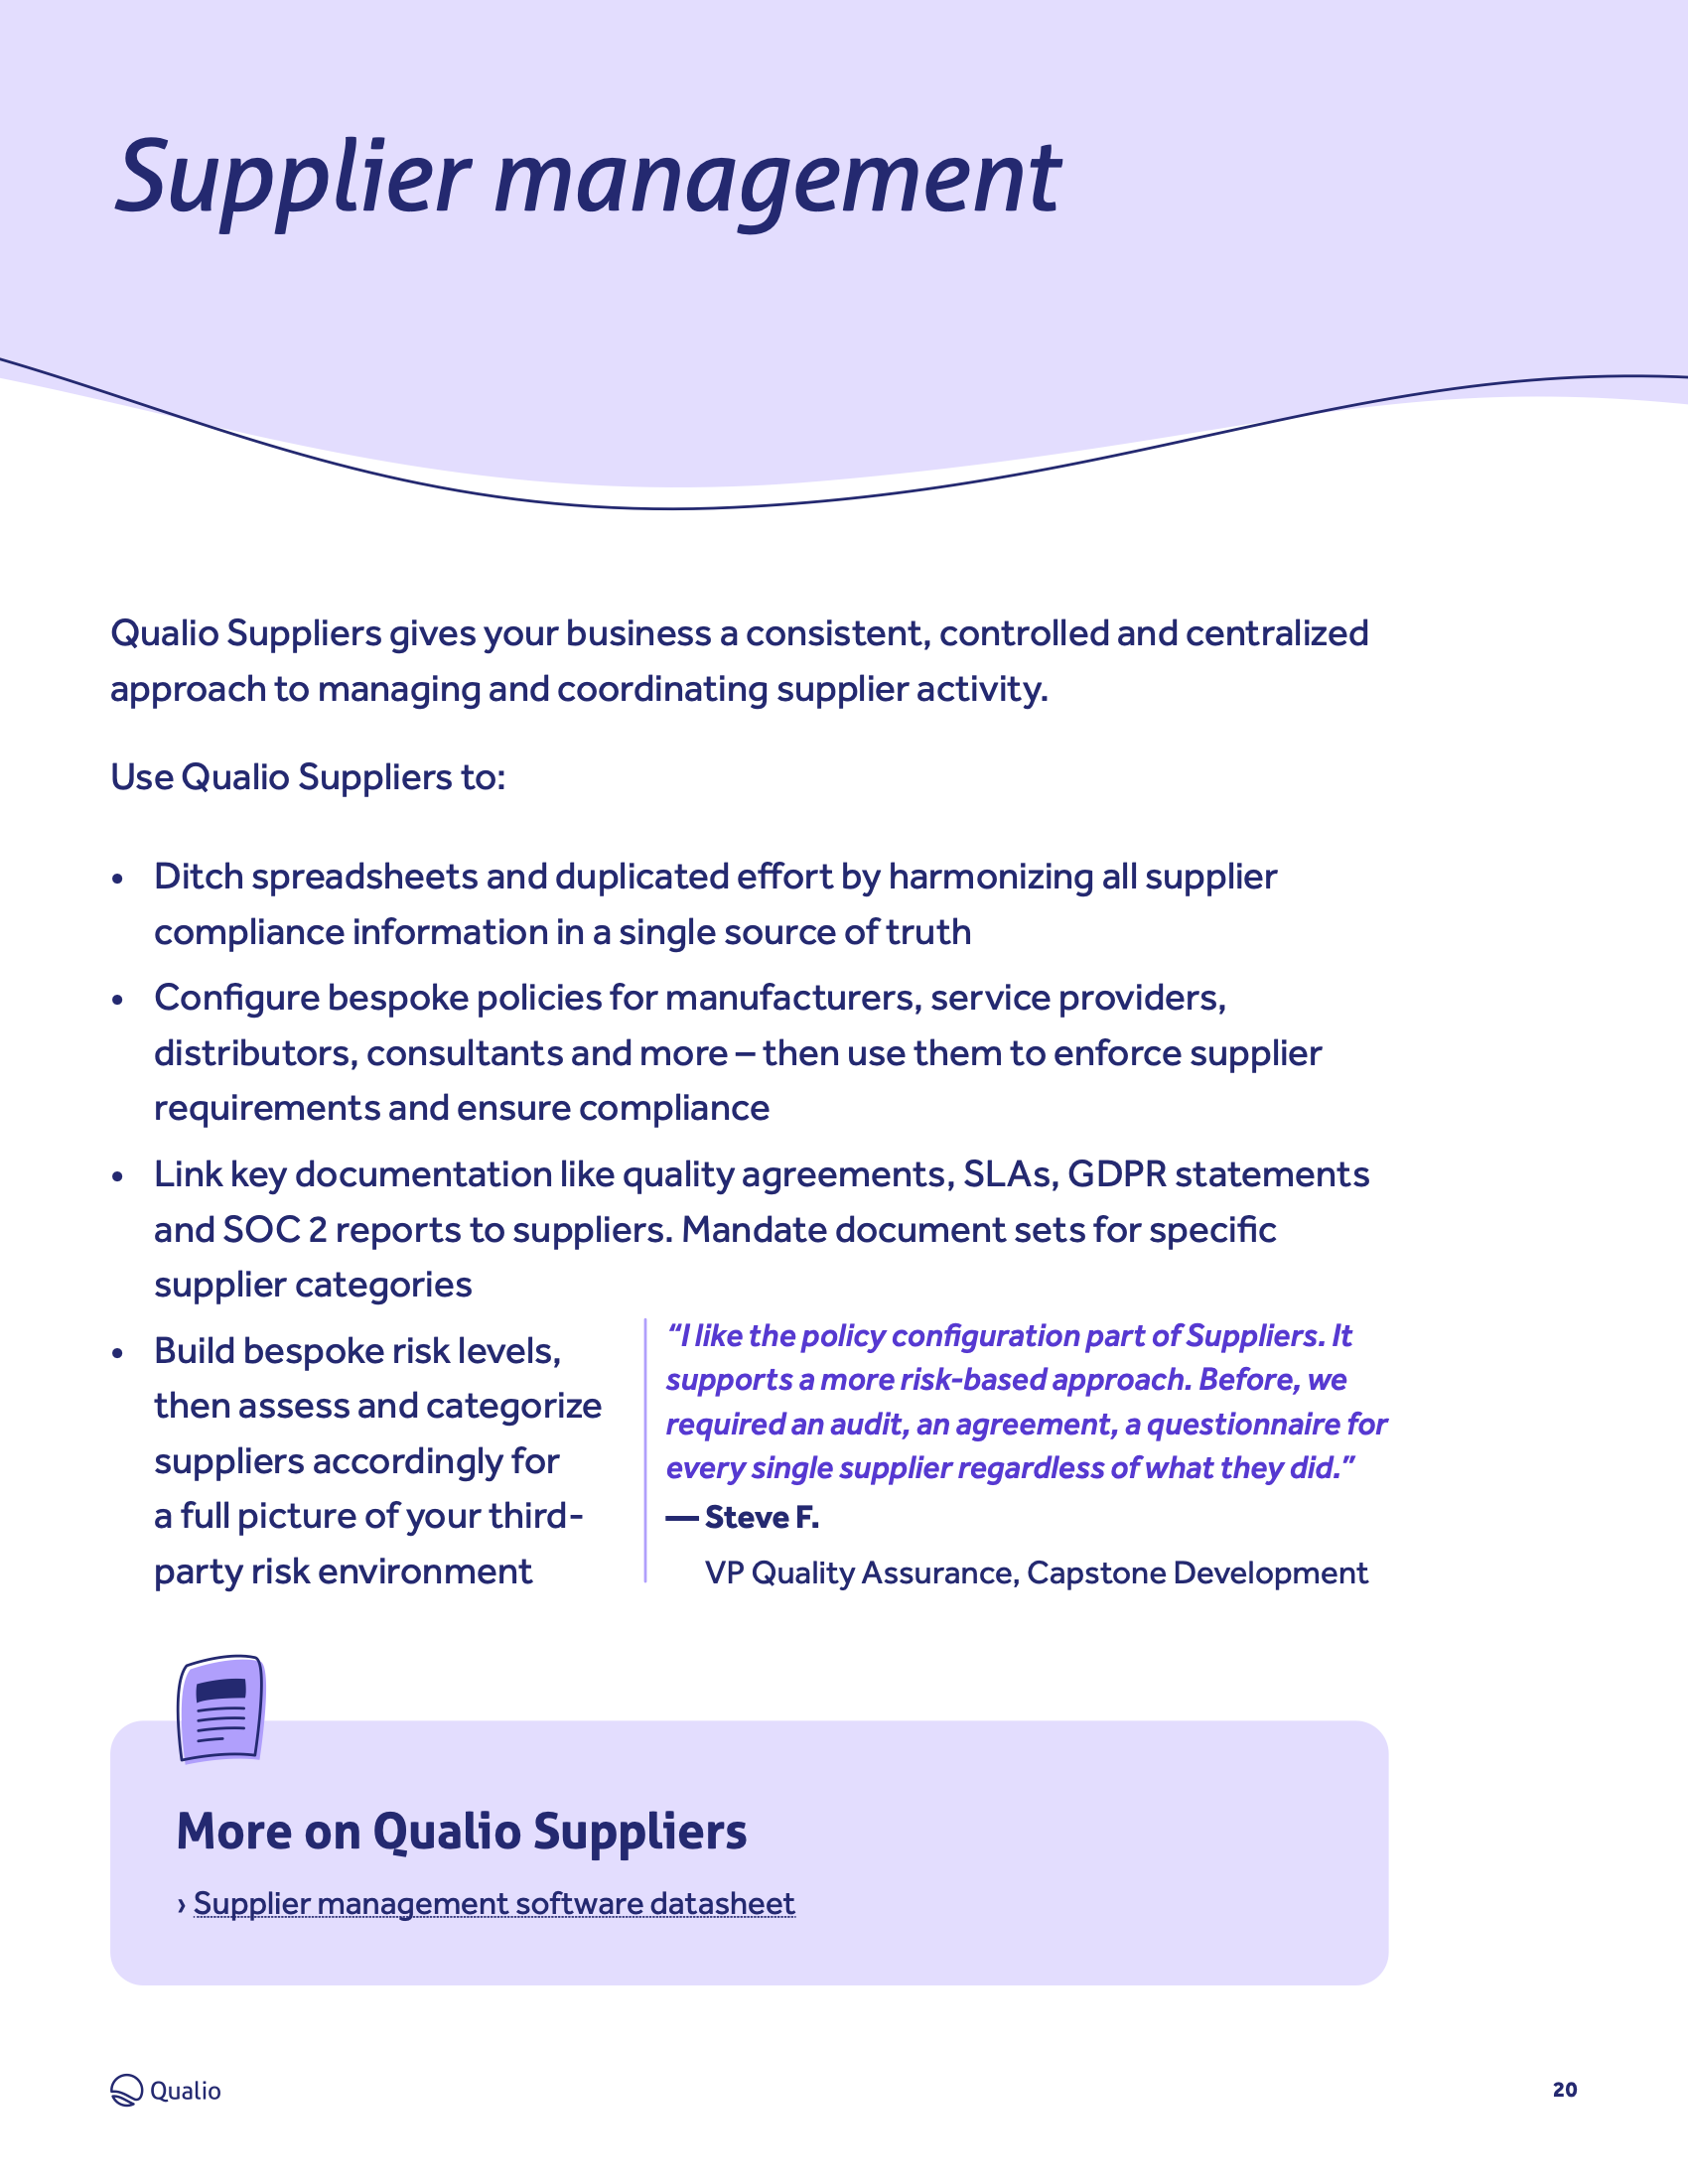 Qualio supplier management functionality